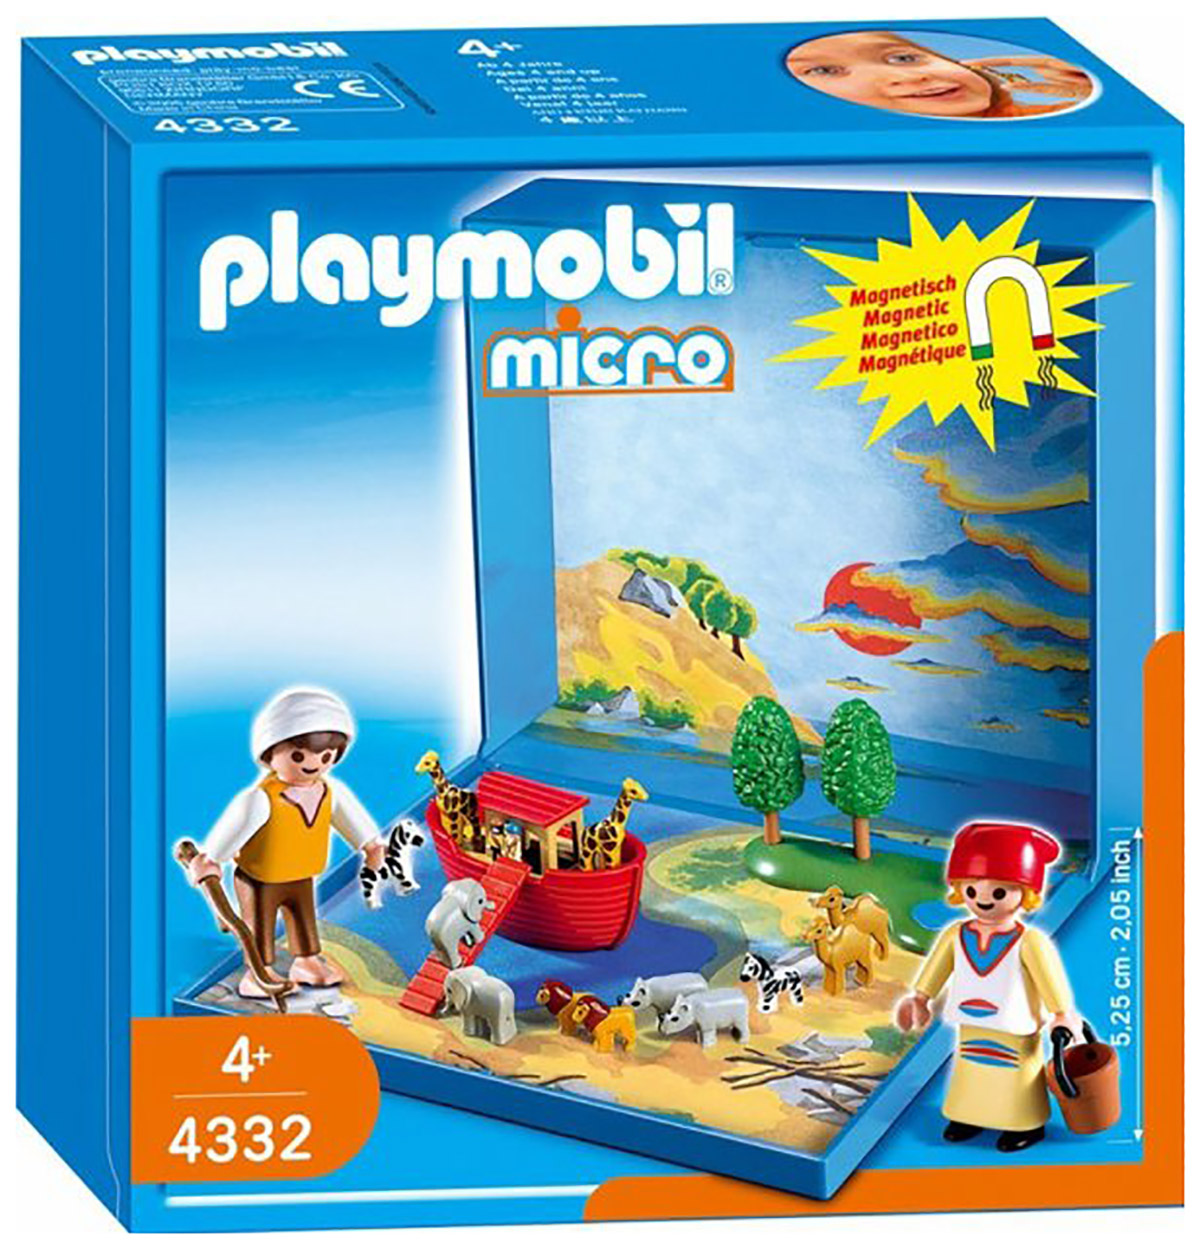 Playmobil Micro 4332 pas cher, Micro Playmobil Arche de Noé